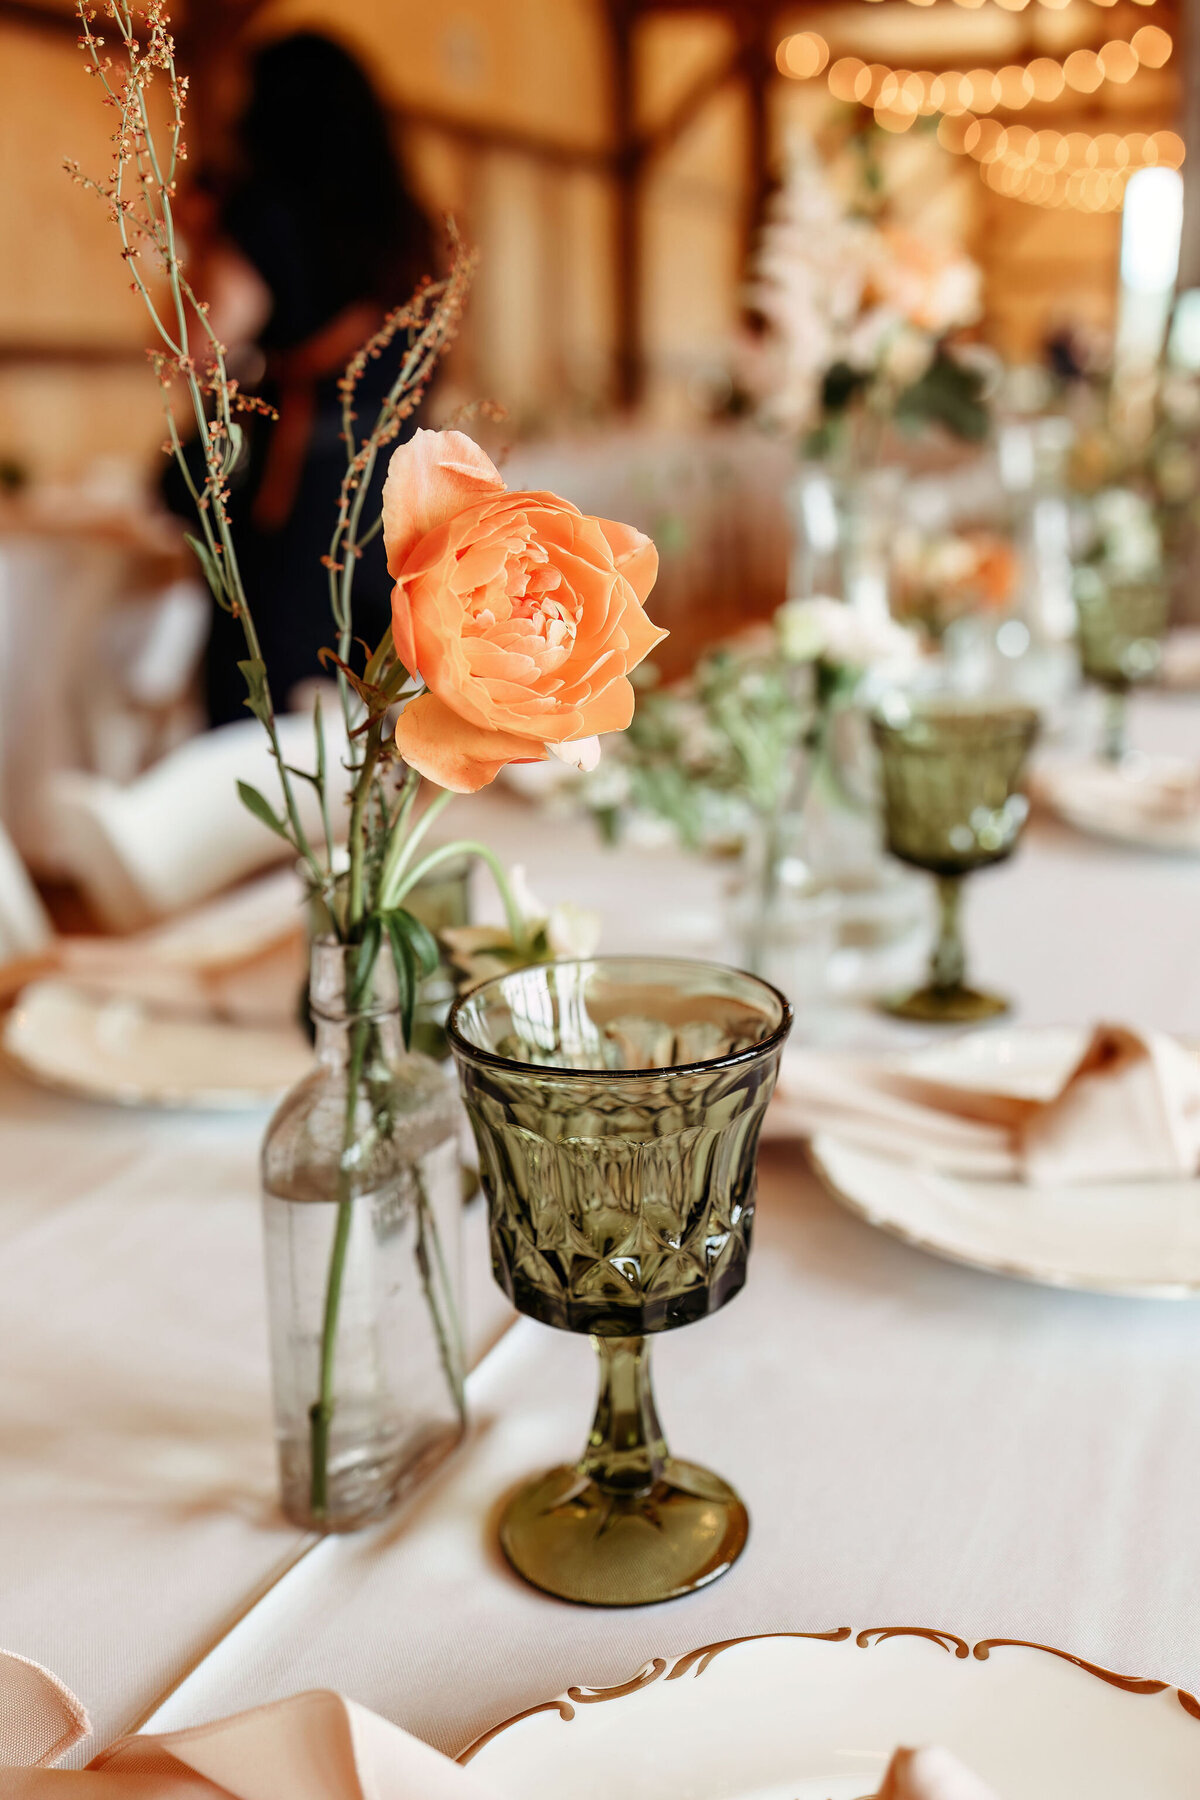 raymond-farm-new-hartford-ct-barn-wedding-flowers-centerpieces-tableware-rentals-petals-plates-32